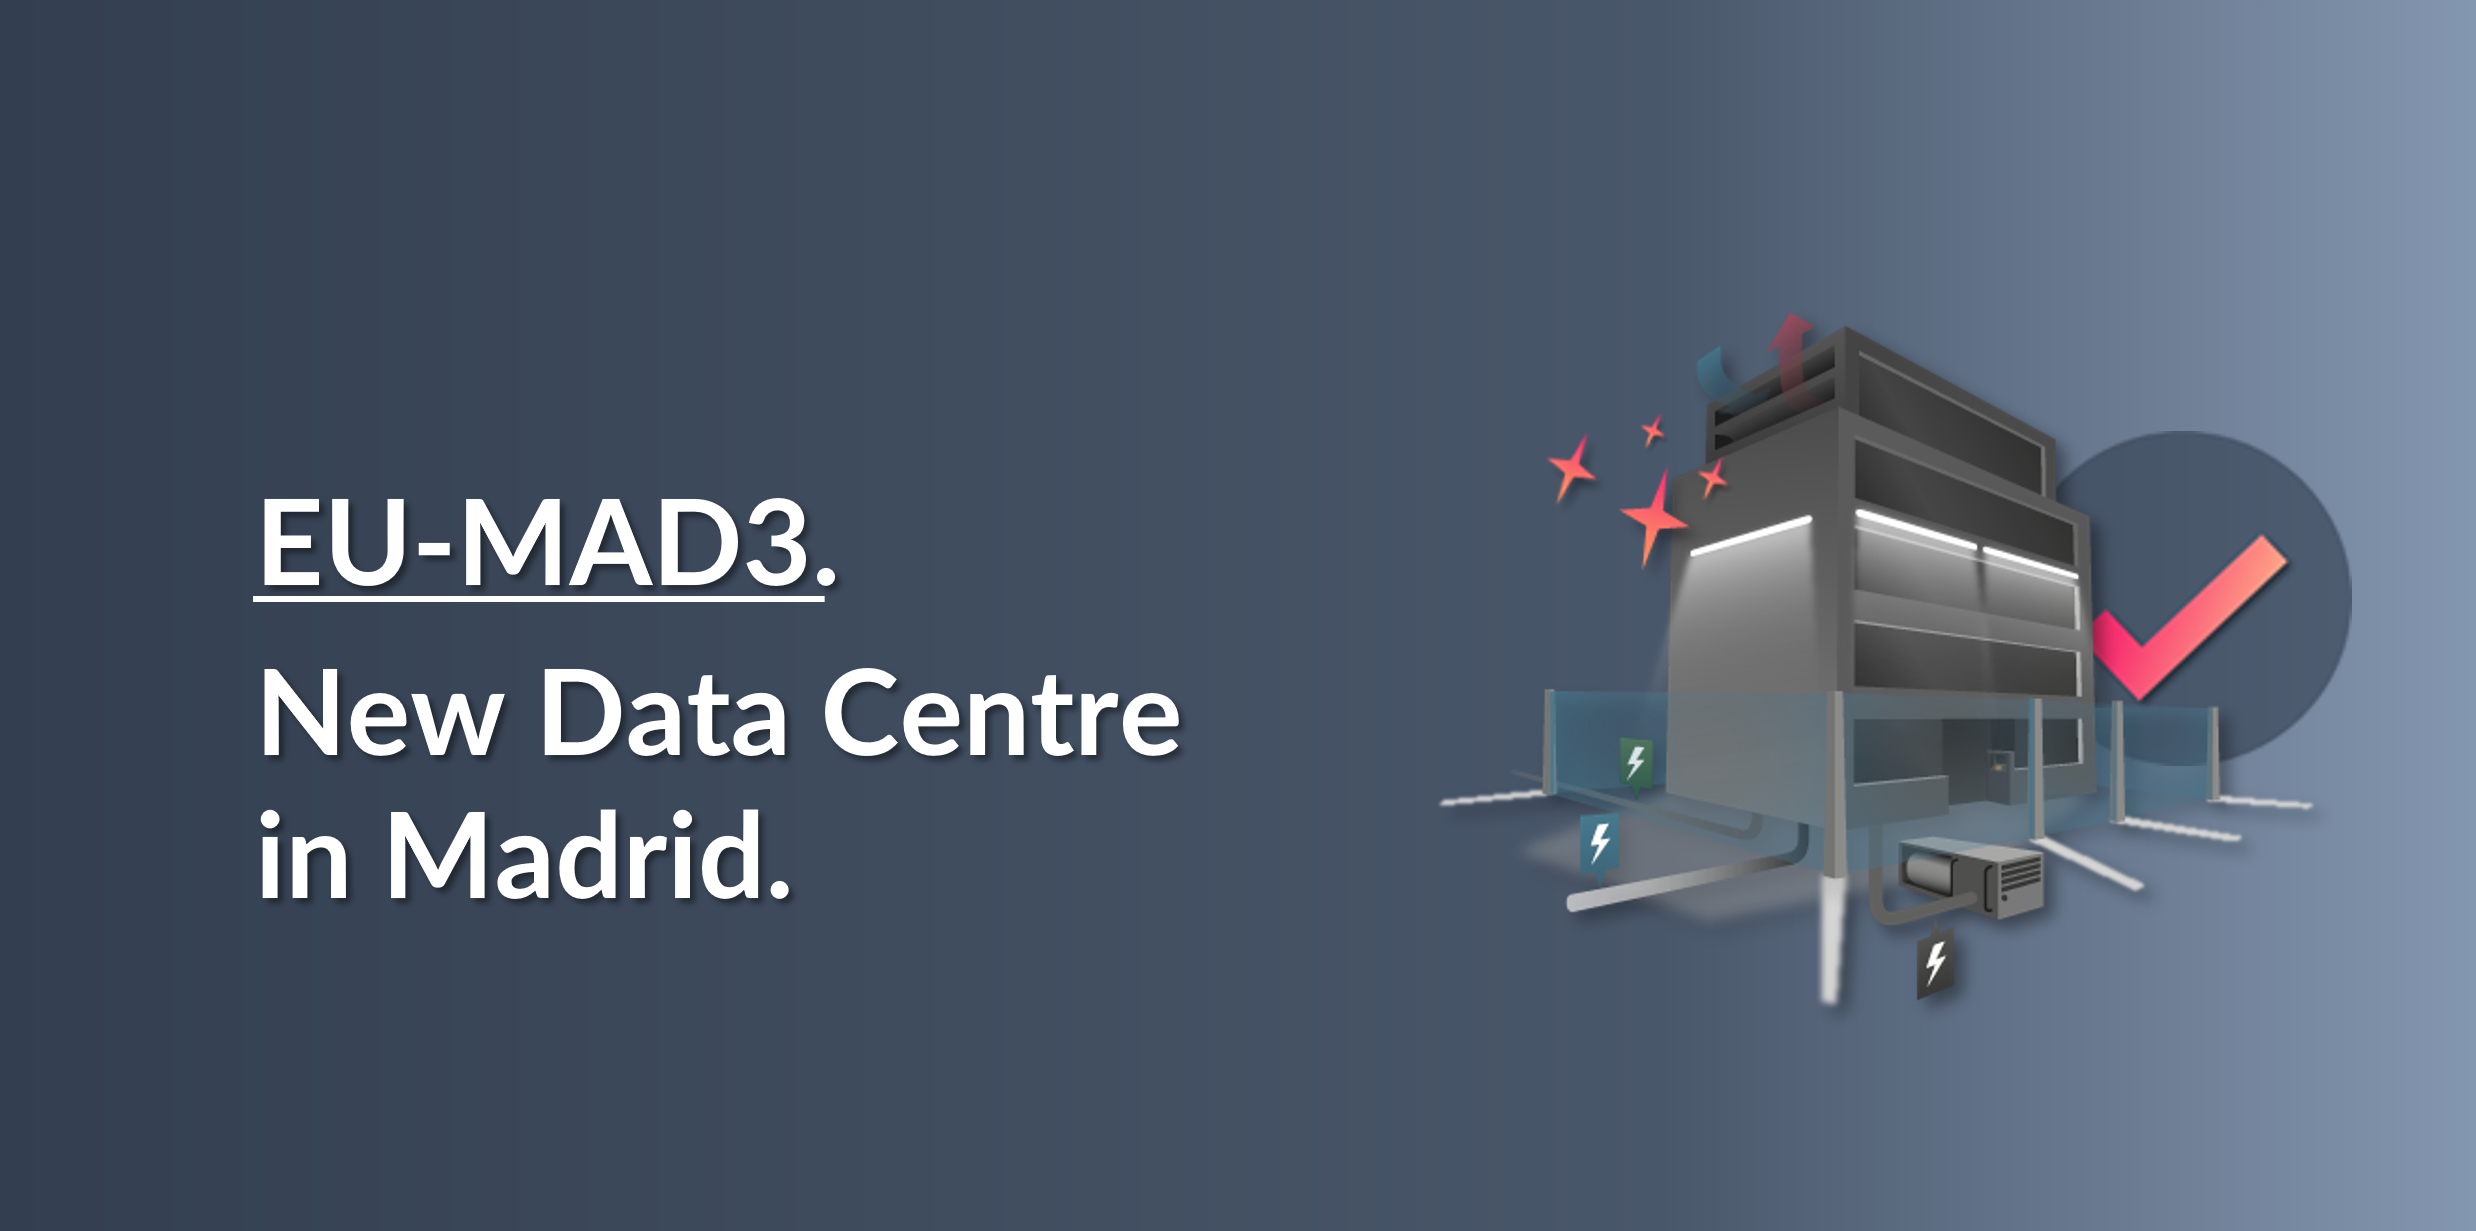 New Data Centre in Madrid